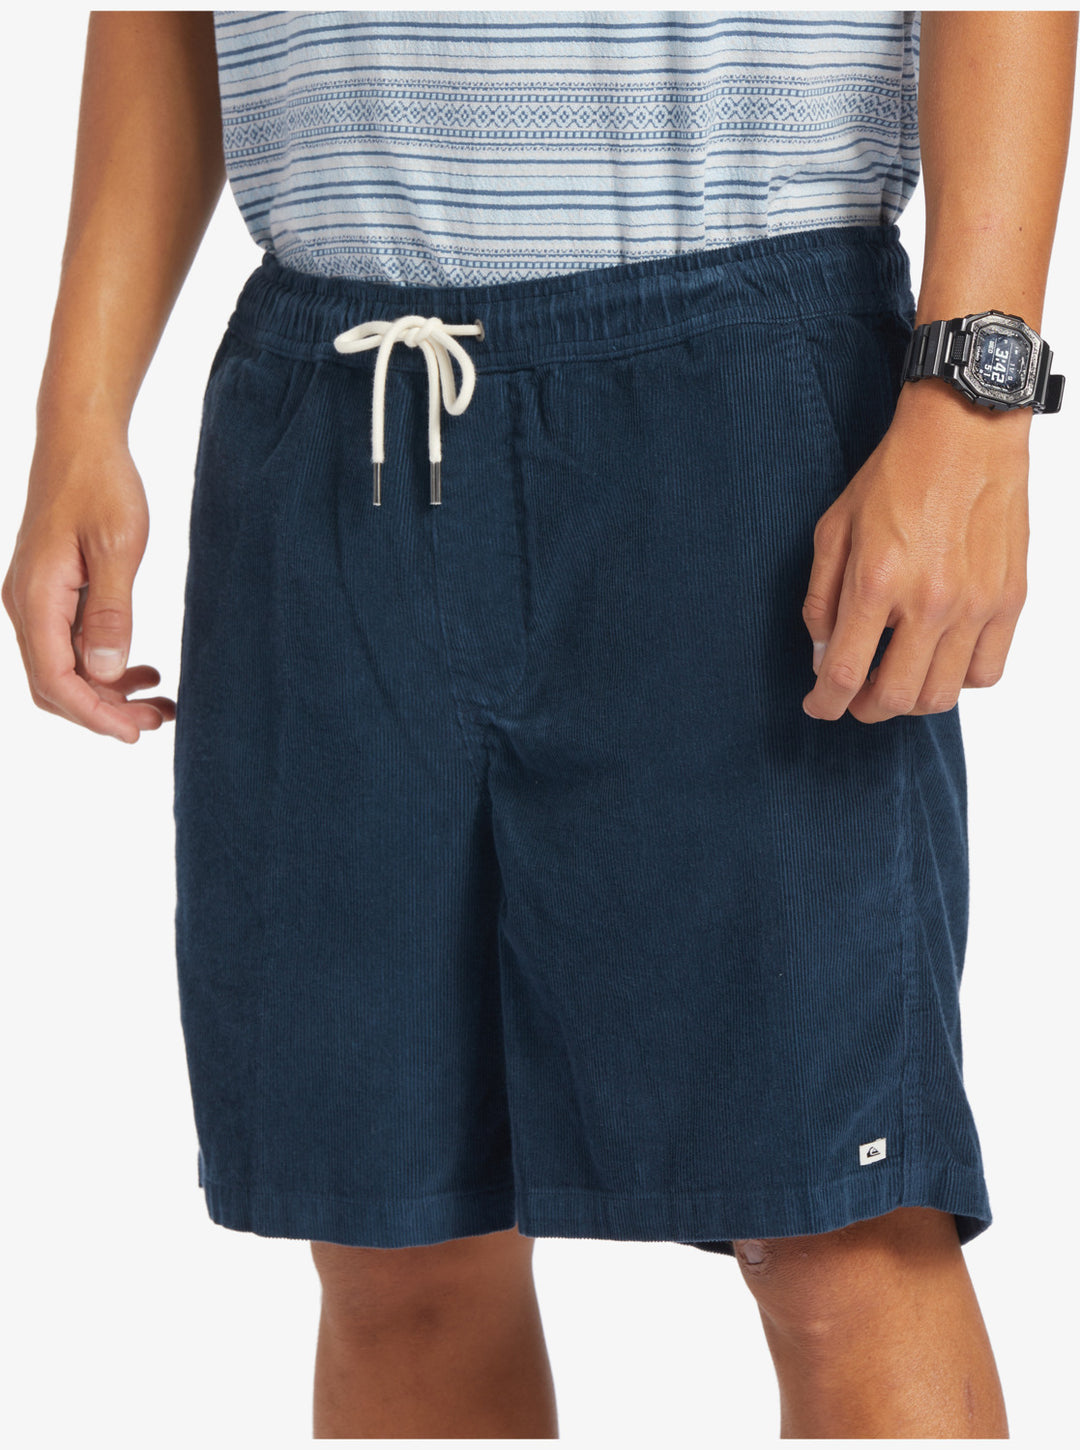 Quiksilver Taxer Cord Shorts - Midnight Navy - Sun Diego Boardshop